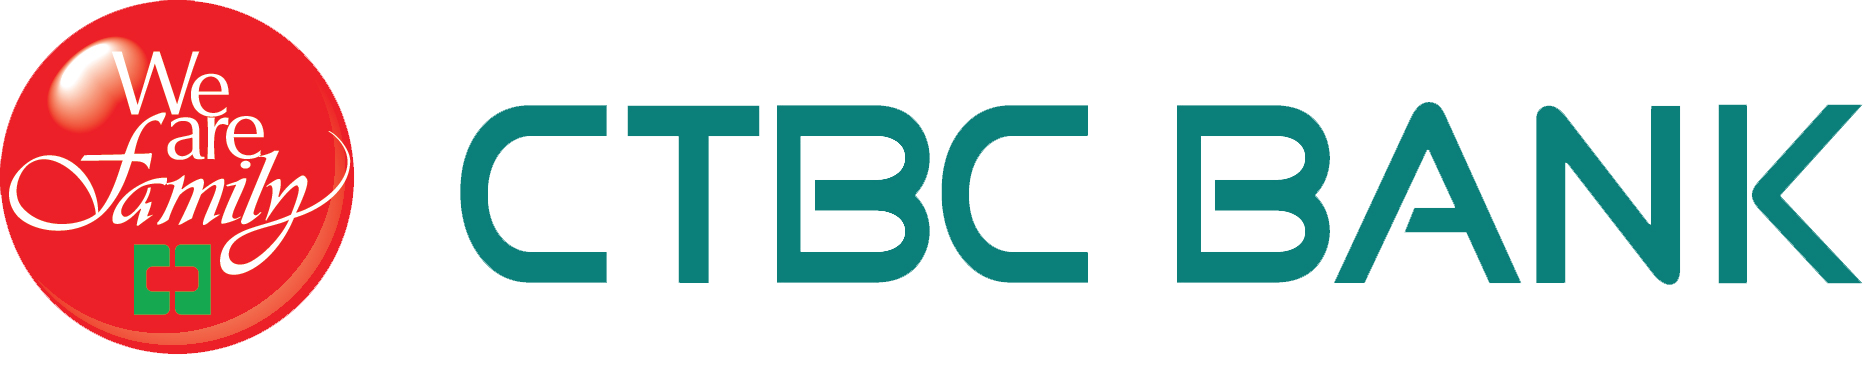 CTBC Bank (Copy)